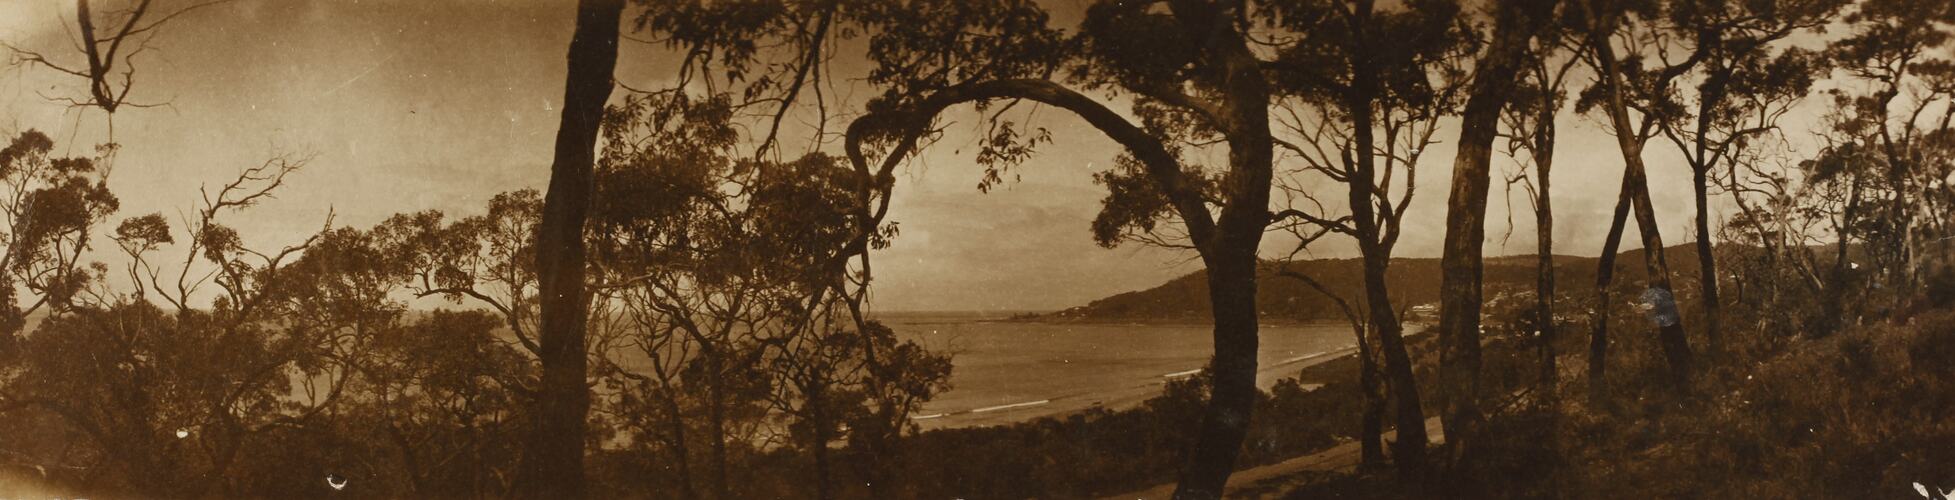 Photograph - Coastal Landscape, Lorne, Victoria, circa 1920s